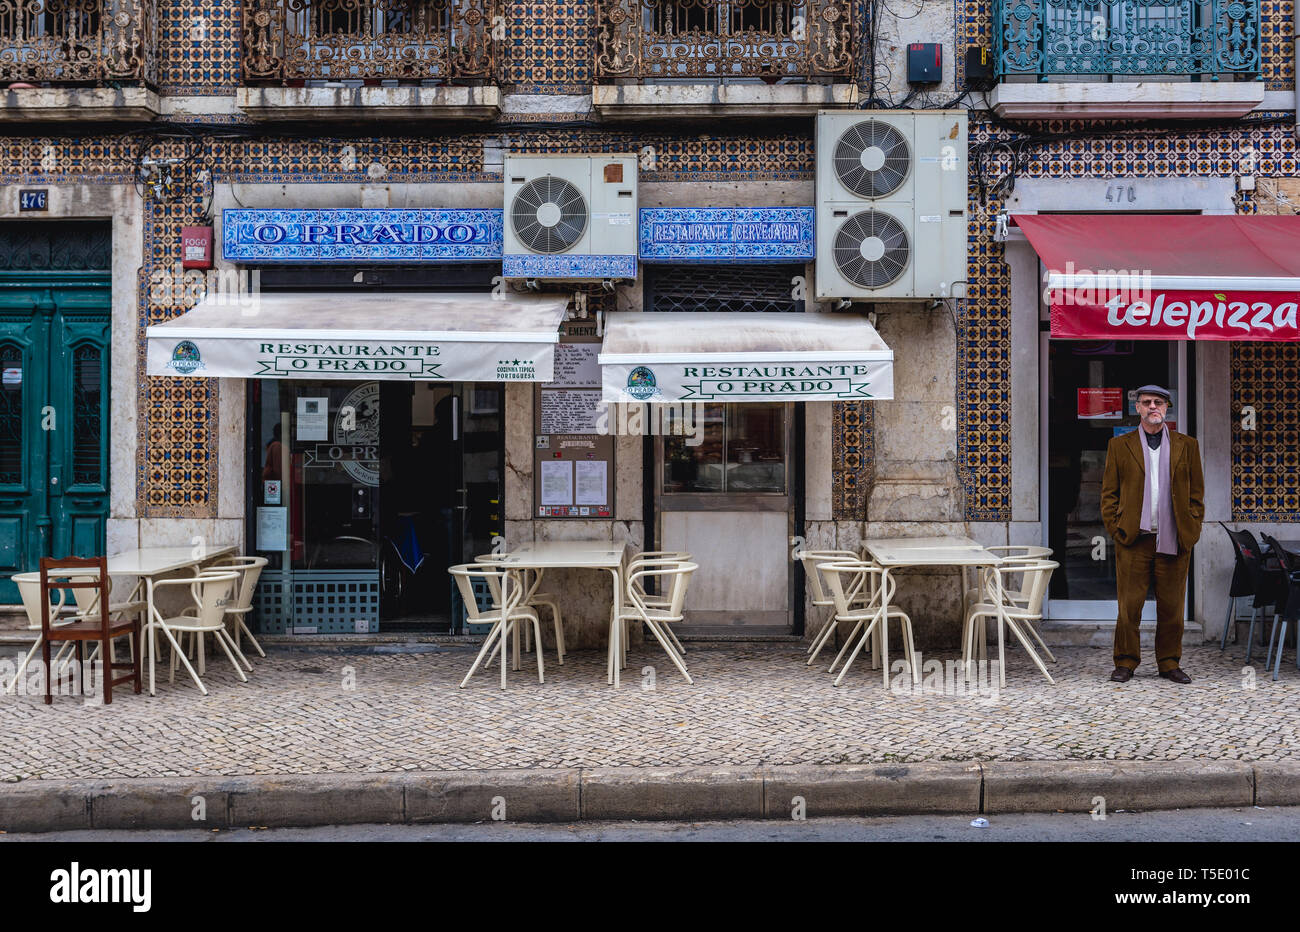 O Prado restaurant on Rua da Junqueira street in Belem district of Lisbon, Portugal Stock Photo